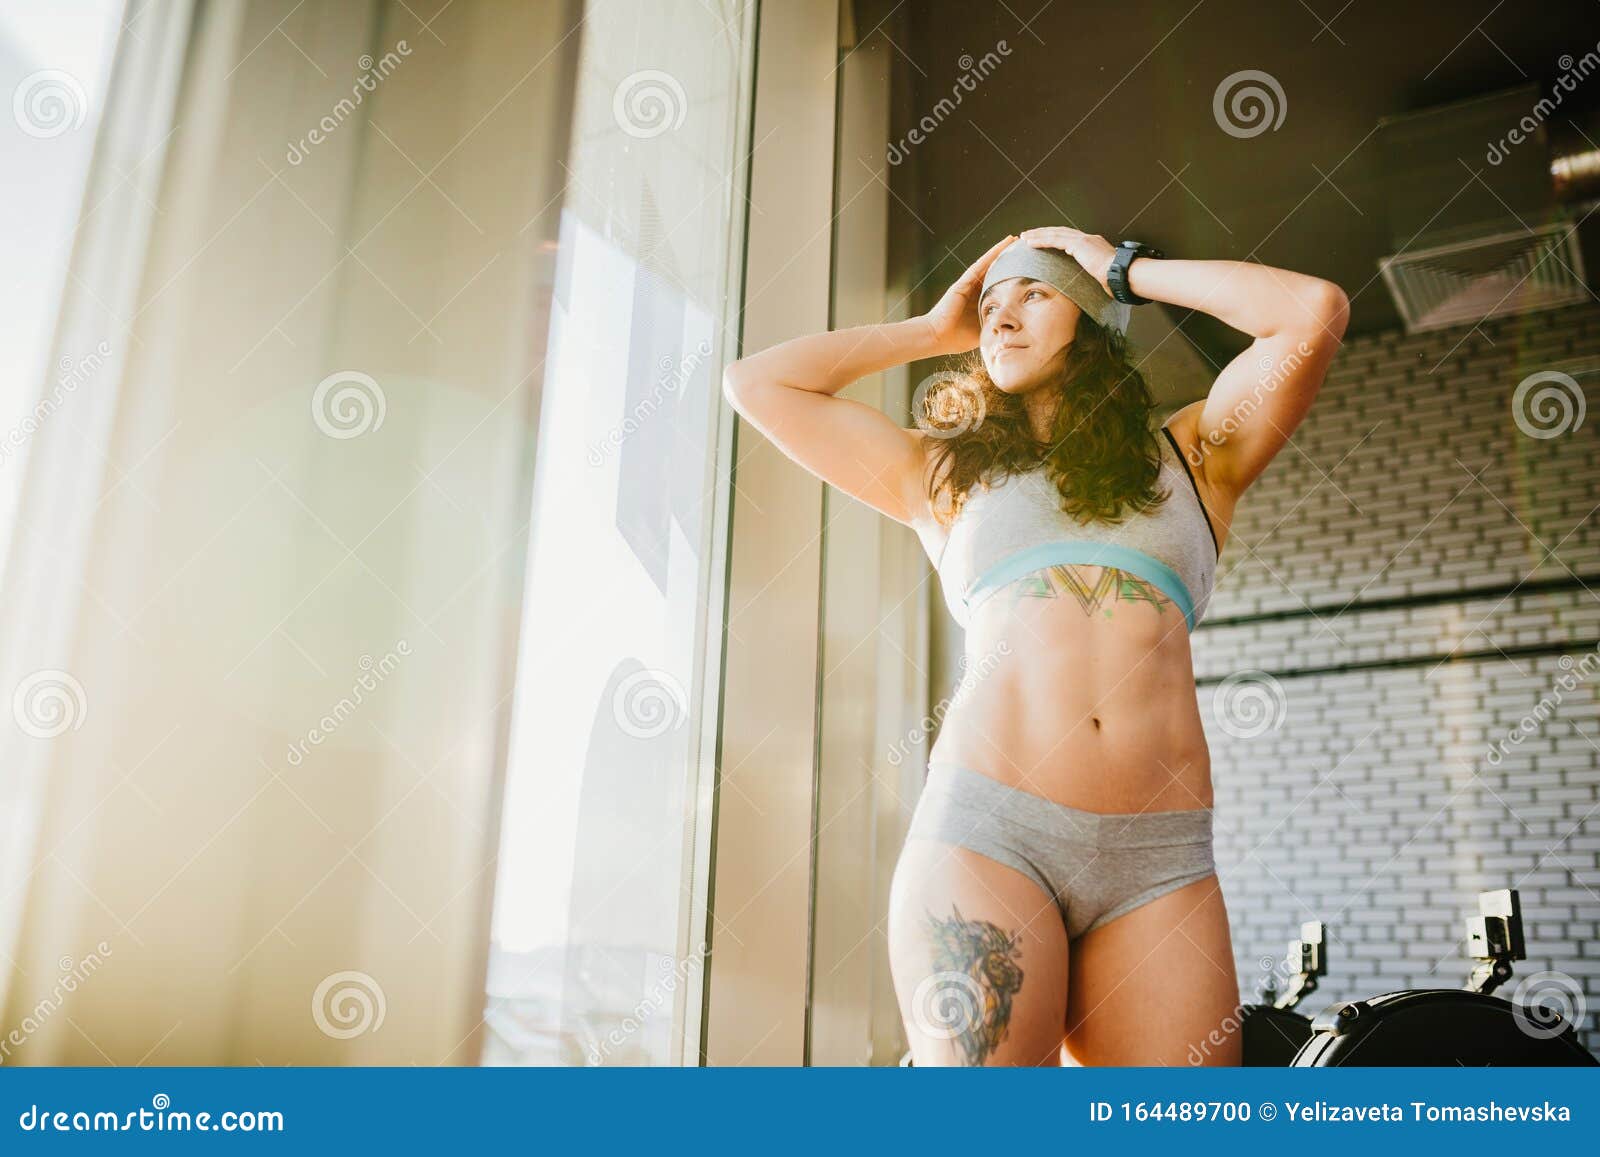 Female Fitness Model in Top Posing Near Big Window pic